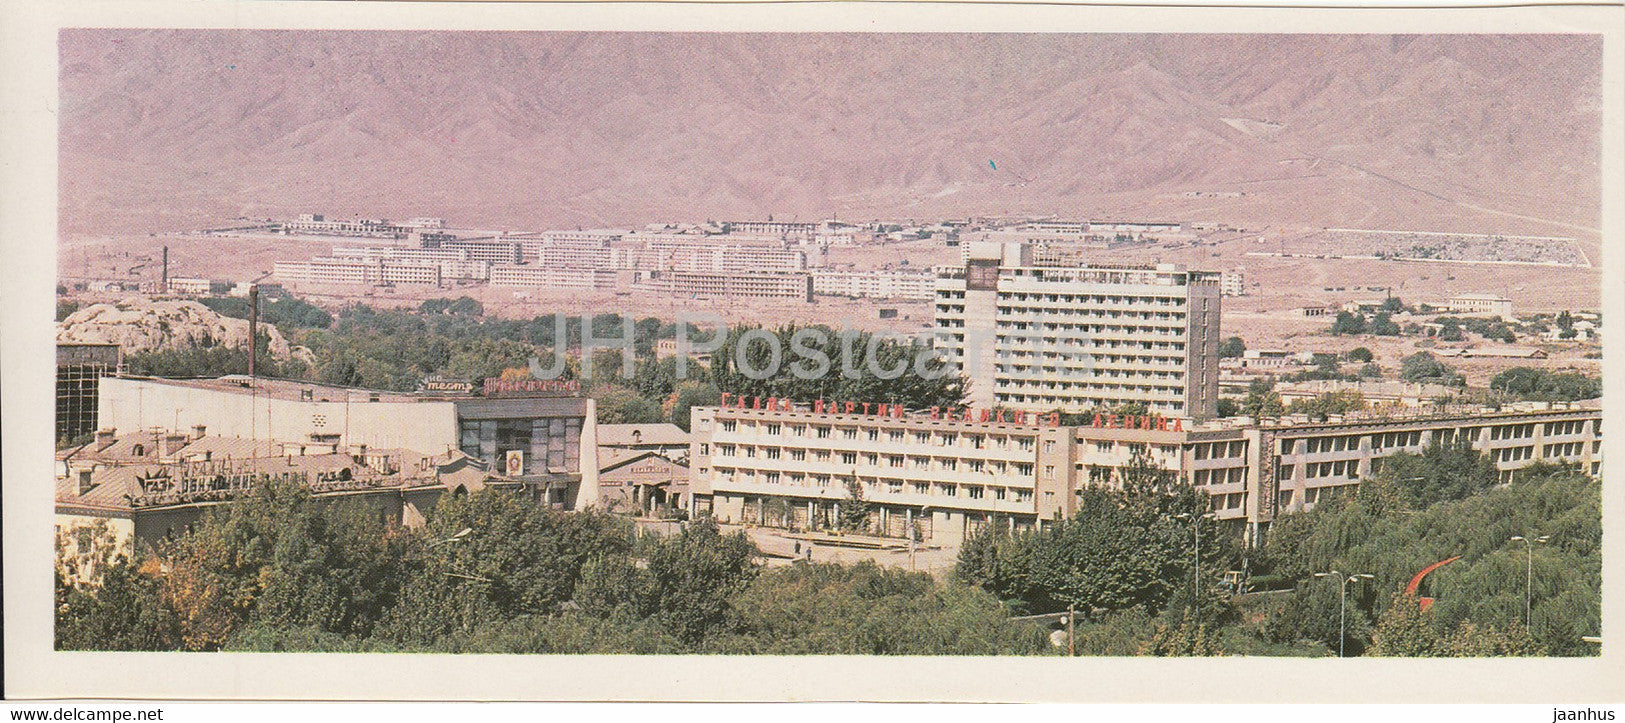 Leninabad - Khujand - new neighborhoods are growing - 1979 - Tajikistan USSR - unused - JH Postcards